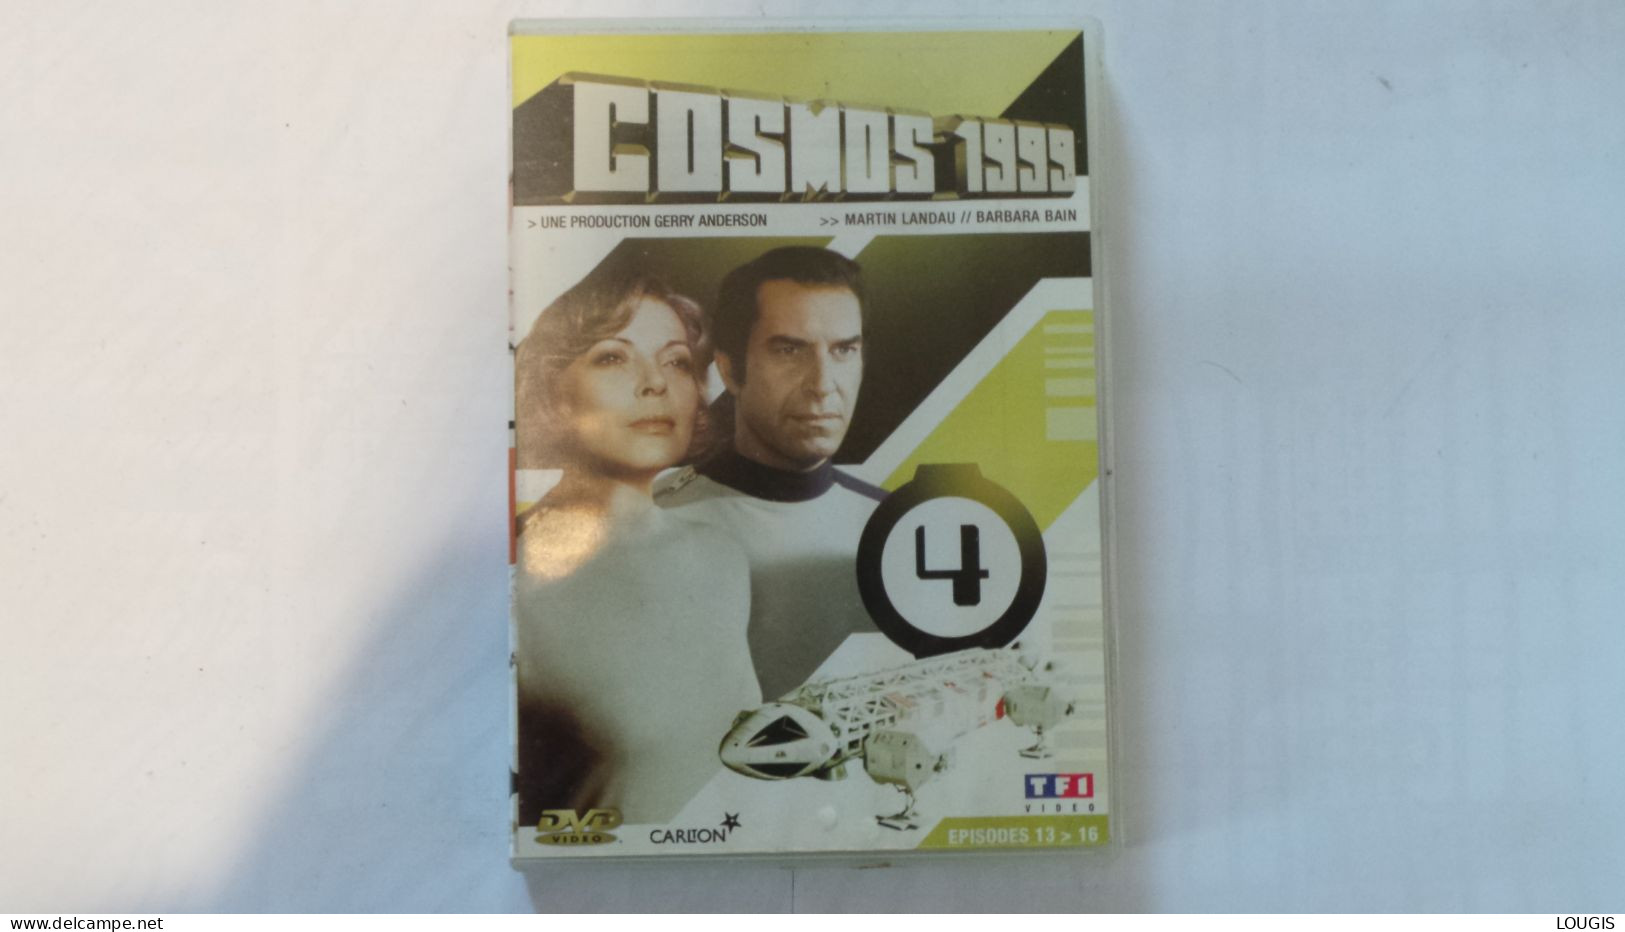 COSMOS 1999 - Klassiker